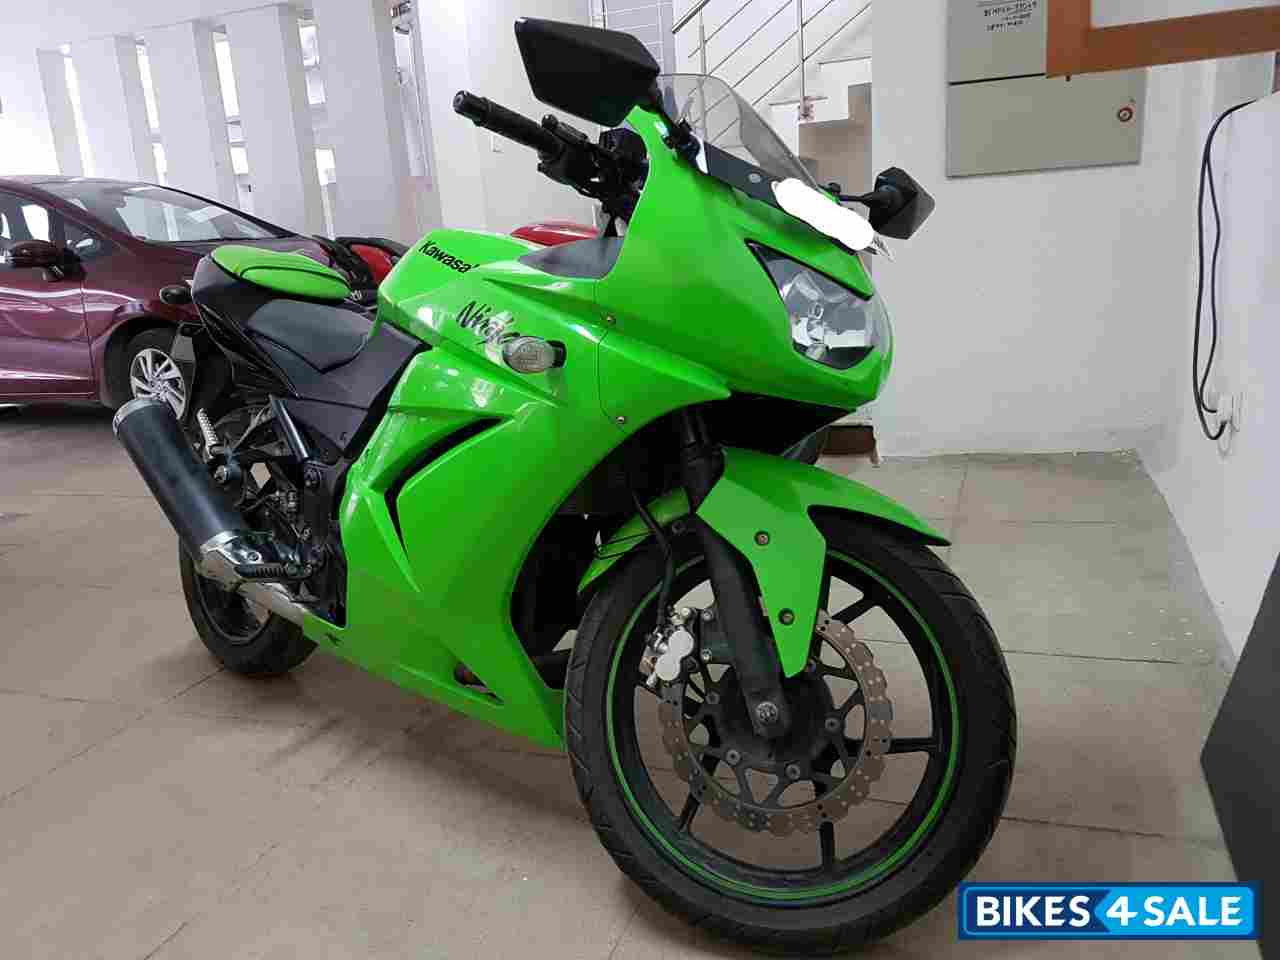 Used 2010 model Kawasaki Ninja 250R for sale in Bangalore. ID 